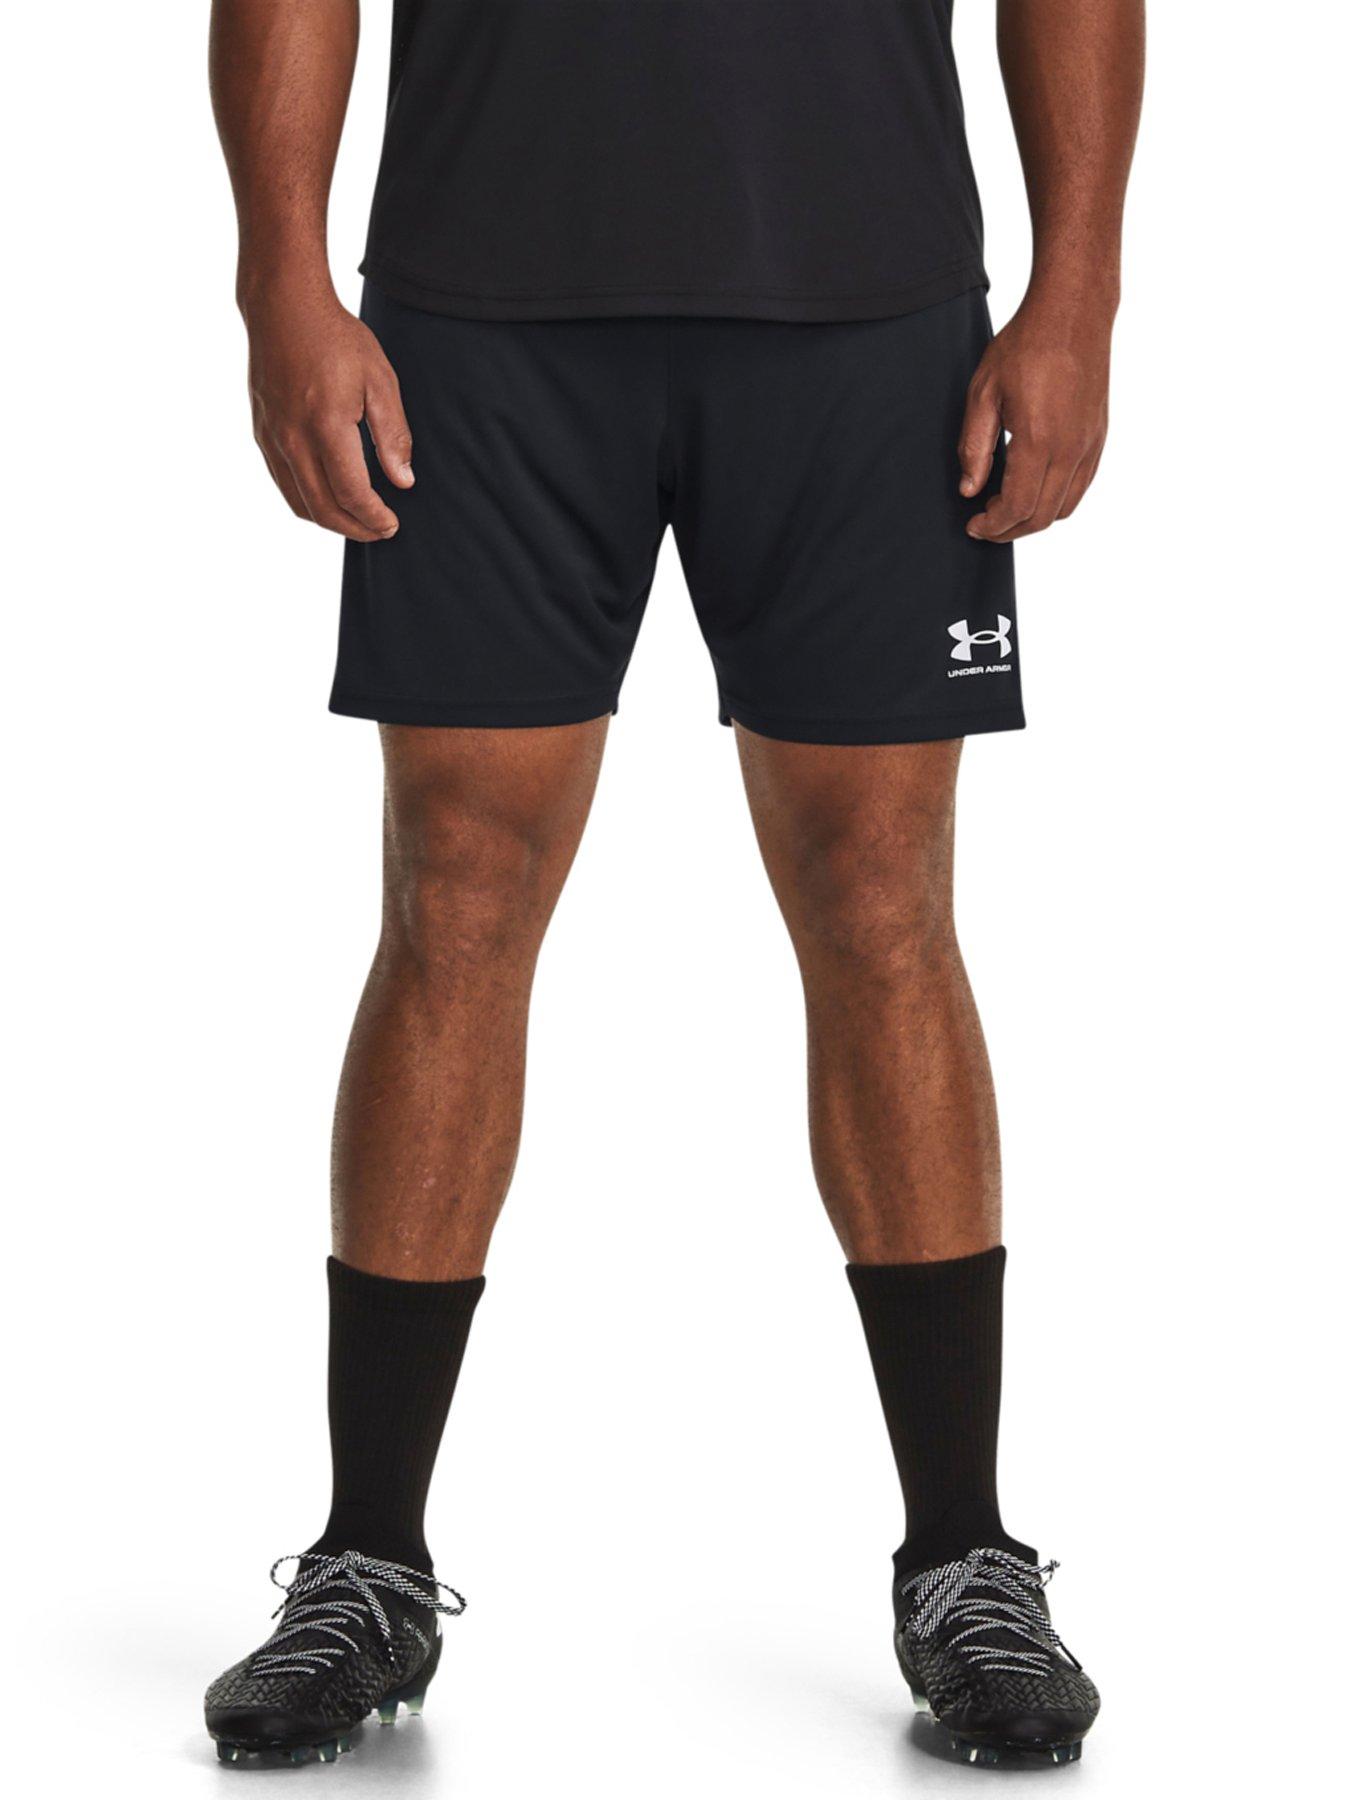 Challenger Shorts - Black